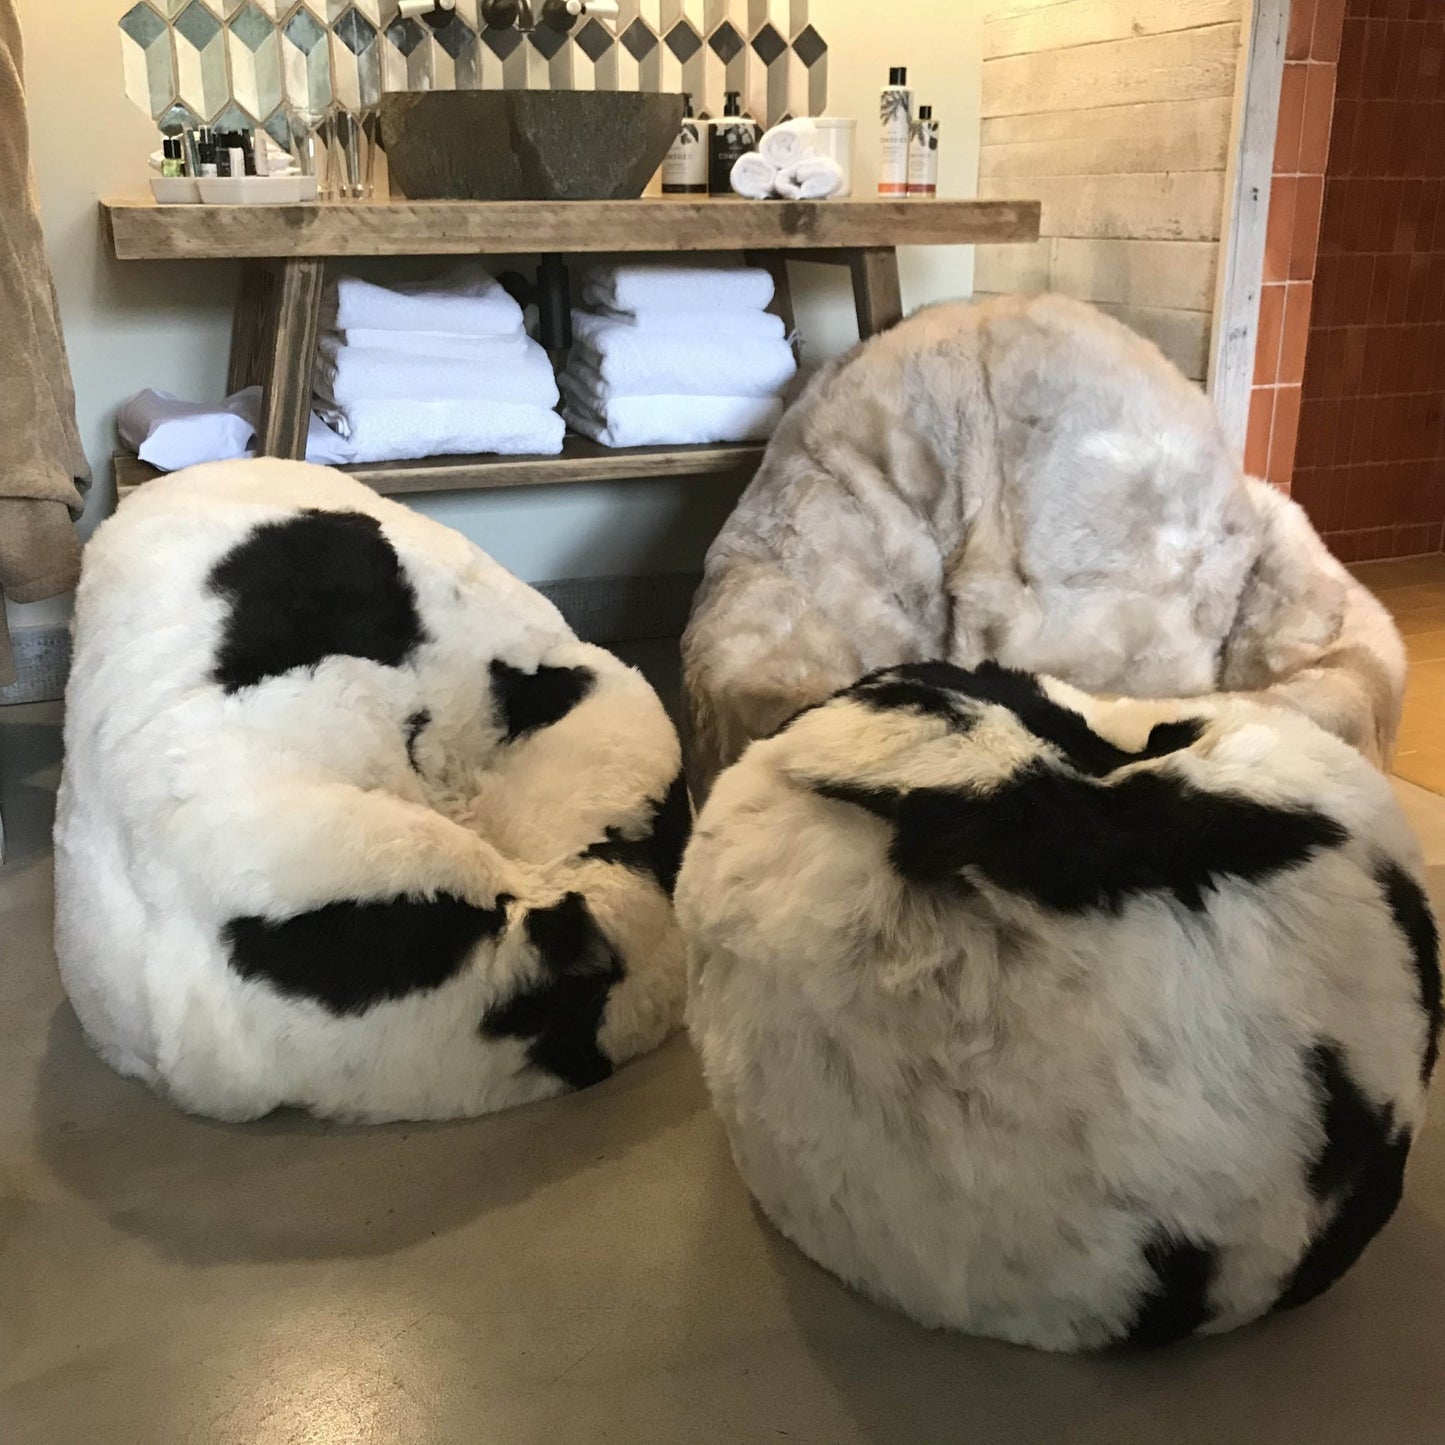 The Boule Icelandic Sheepskin Pouffe - Wildash London